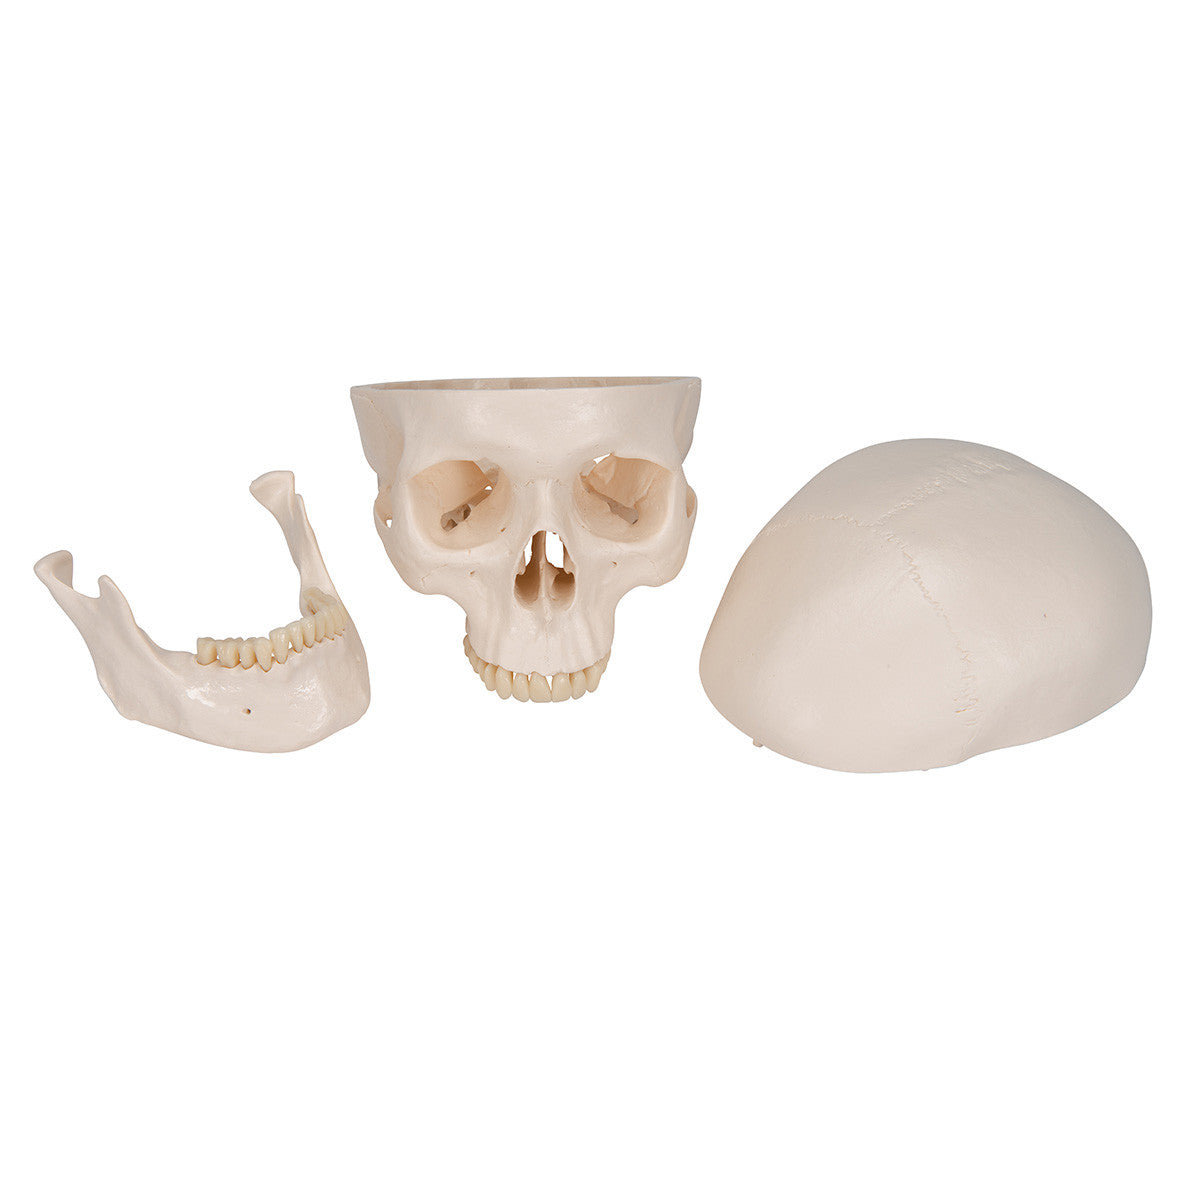 Standard Human Skull, natural cast, adult - disassembled